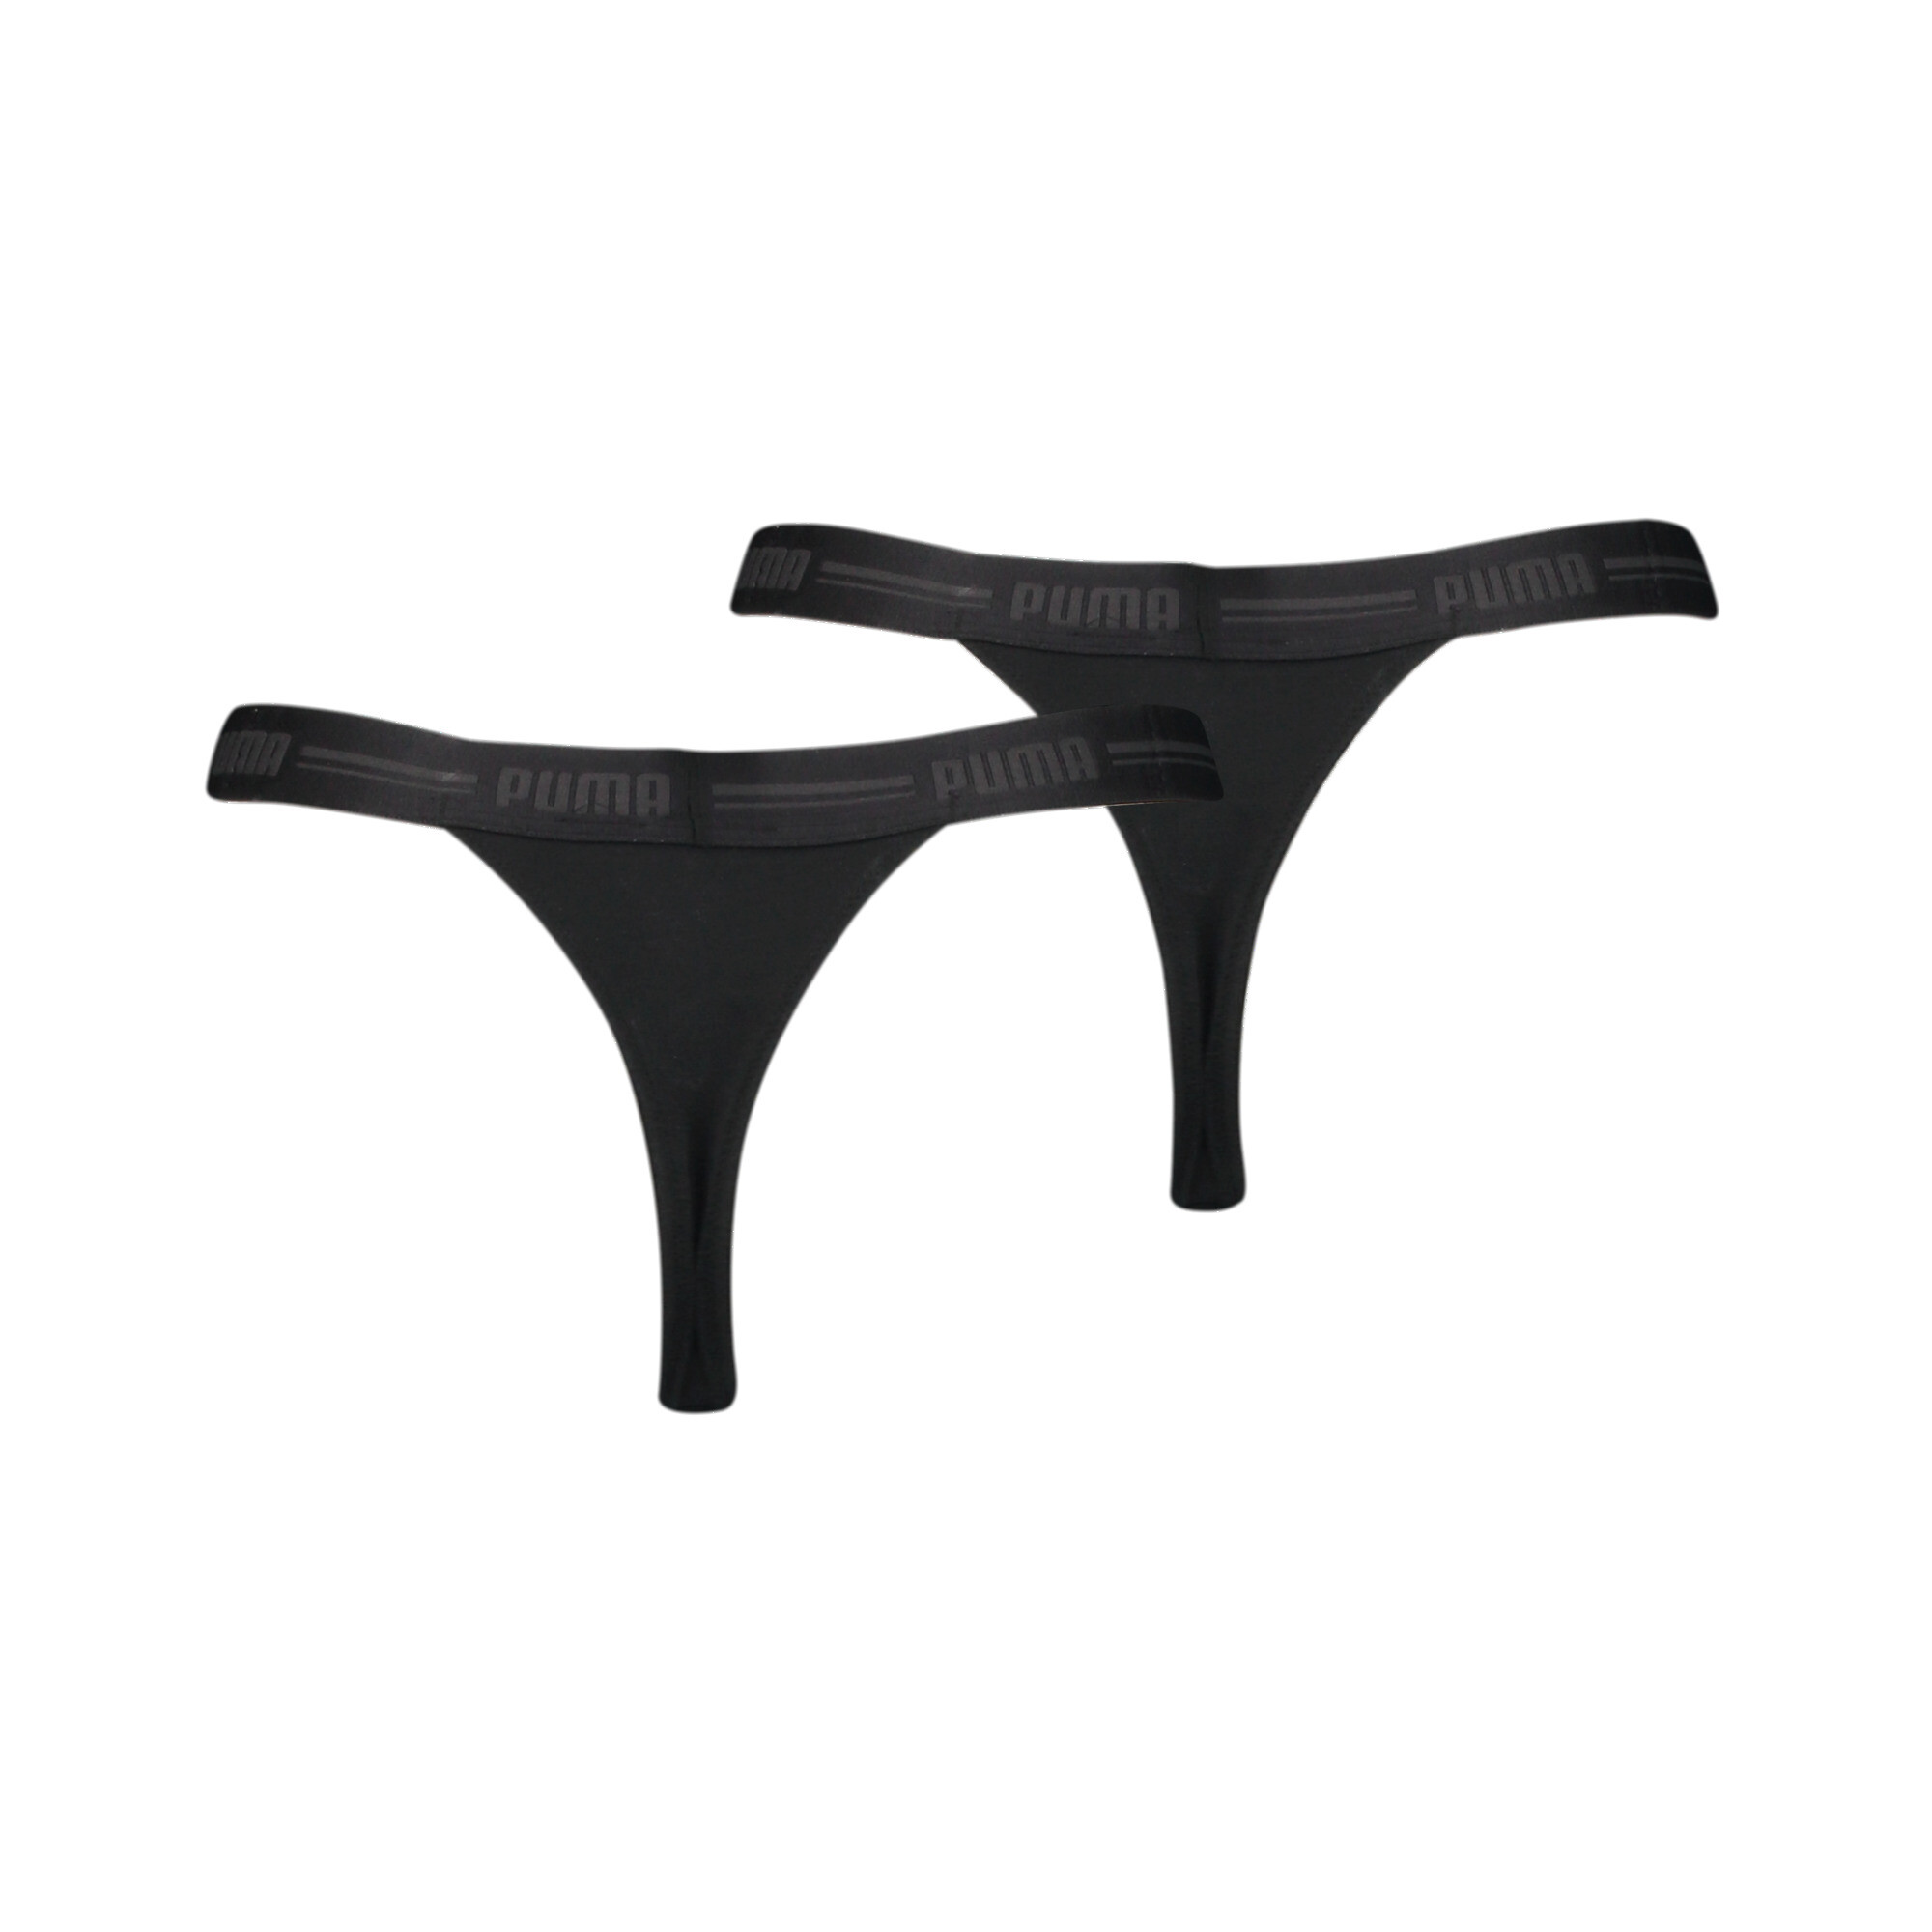 Women's Puma's Heart String Bottom Underwear 2 Pack, Black, Size 1, Clothing